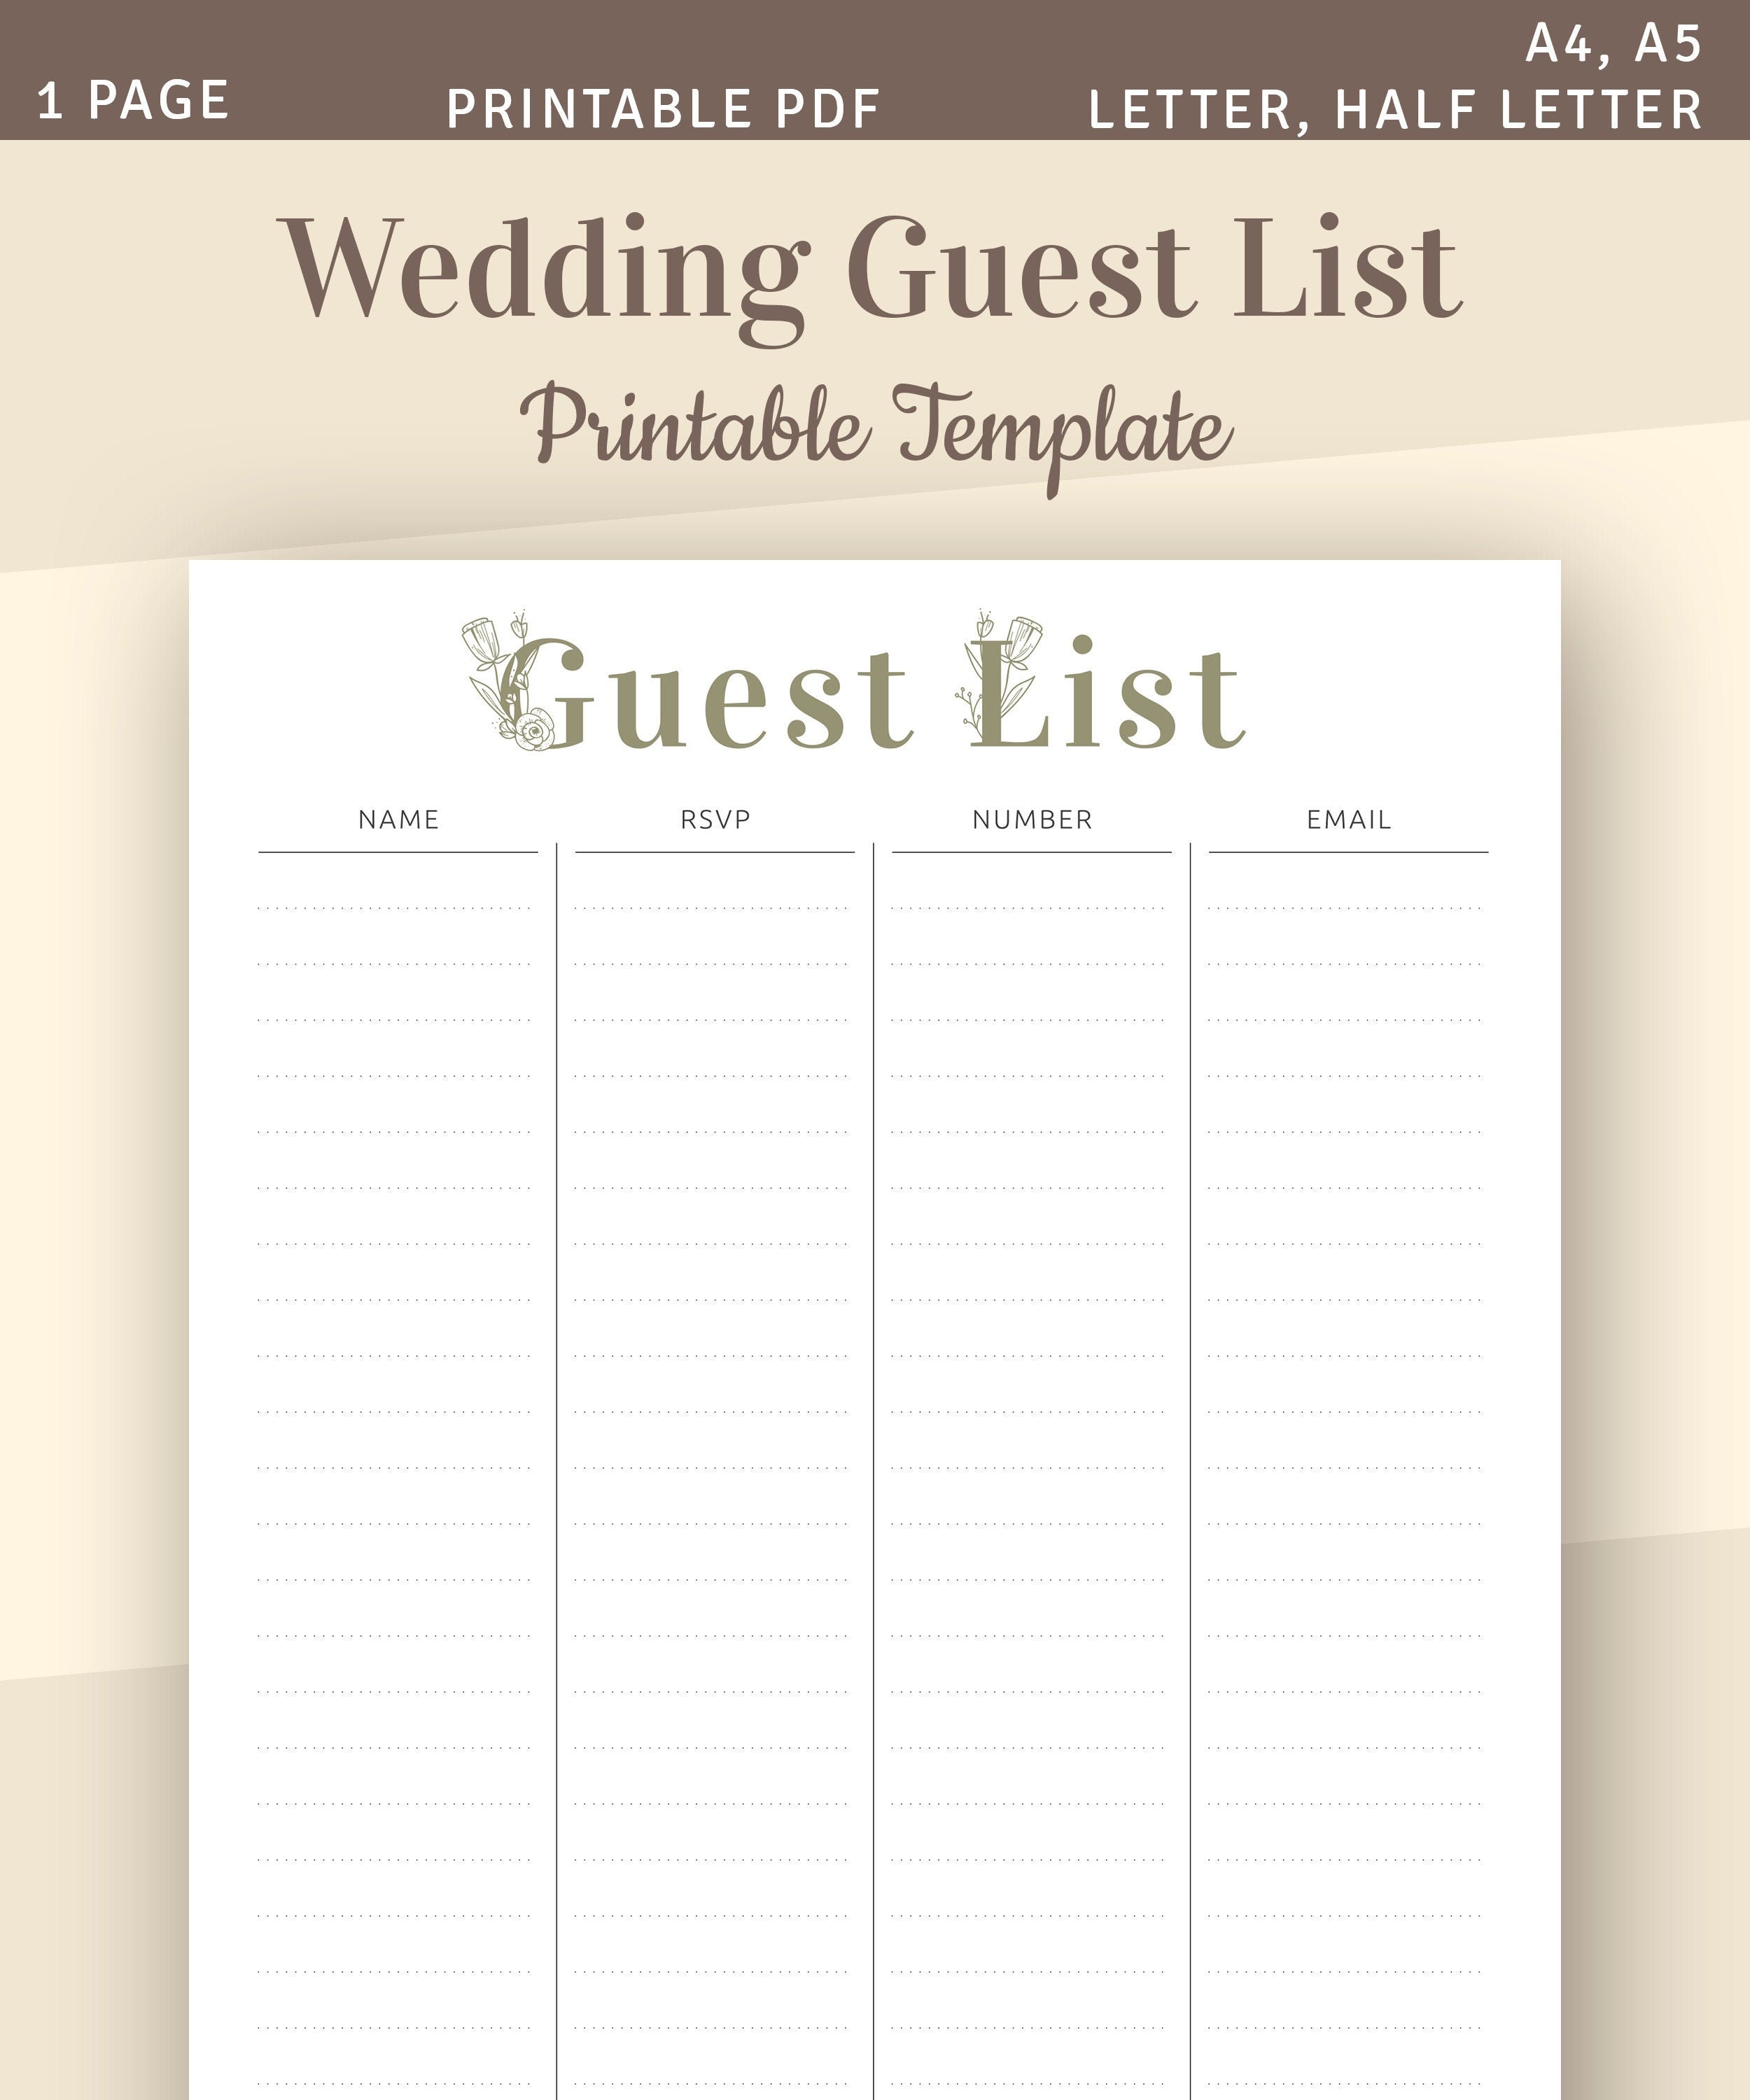 wedding-guest-list-printable-wedding-template-guest-list-etsy